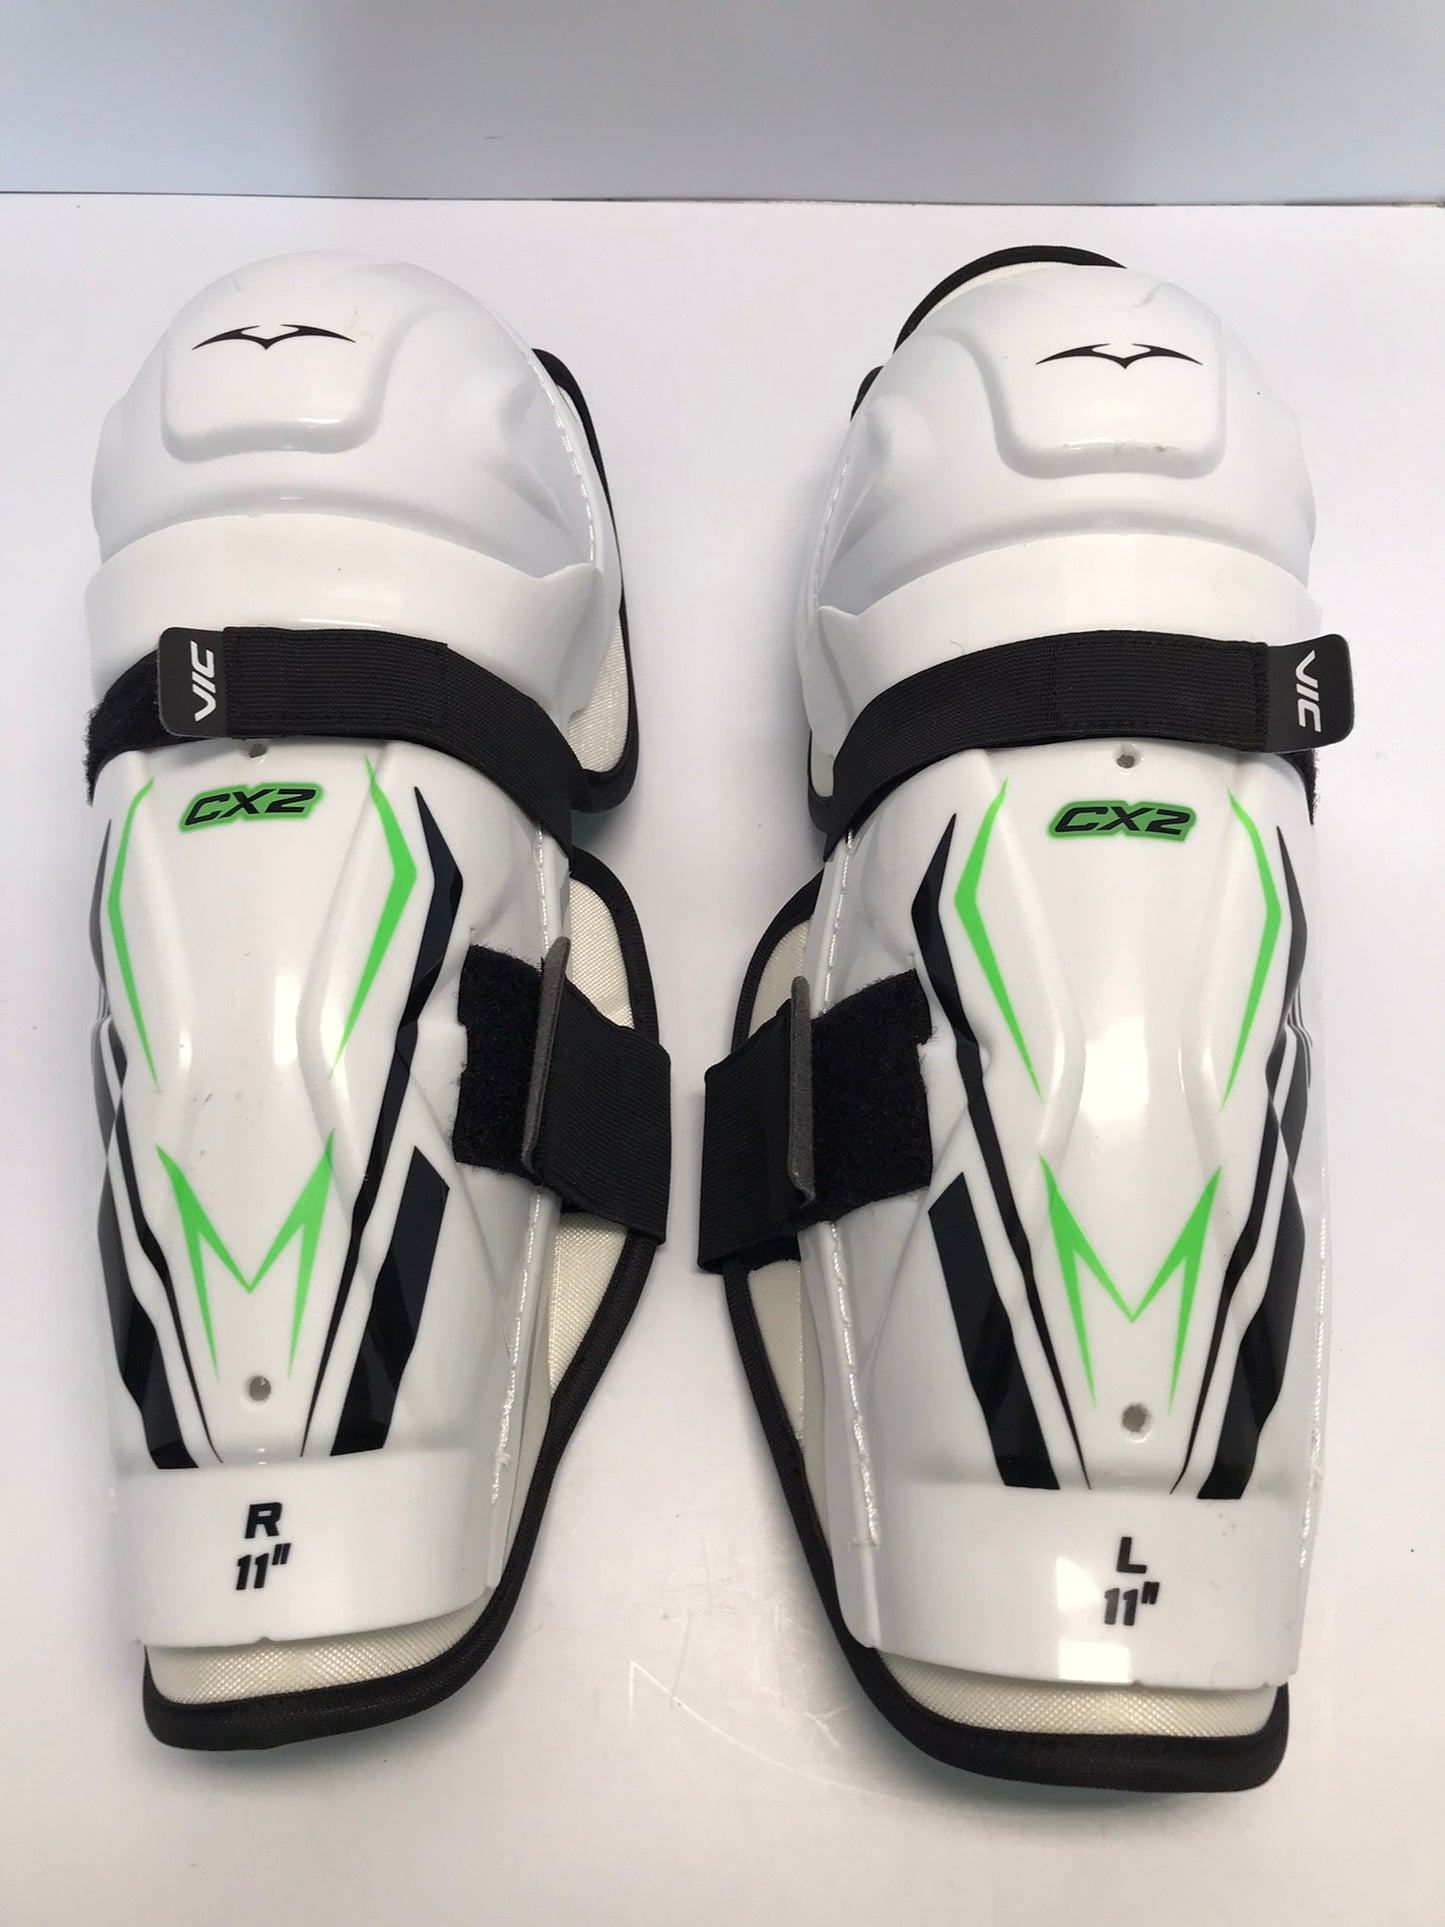 Hockey Shin Pads Child Size 11 inch Vic CX2 Calf Wrap Black White Lime New Demo Model